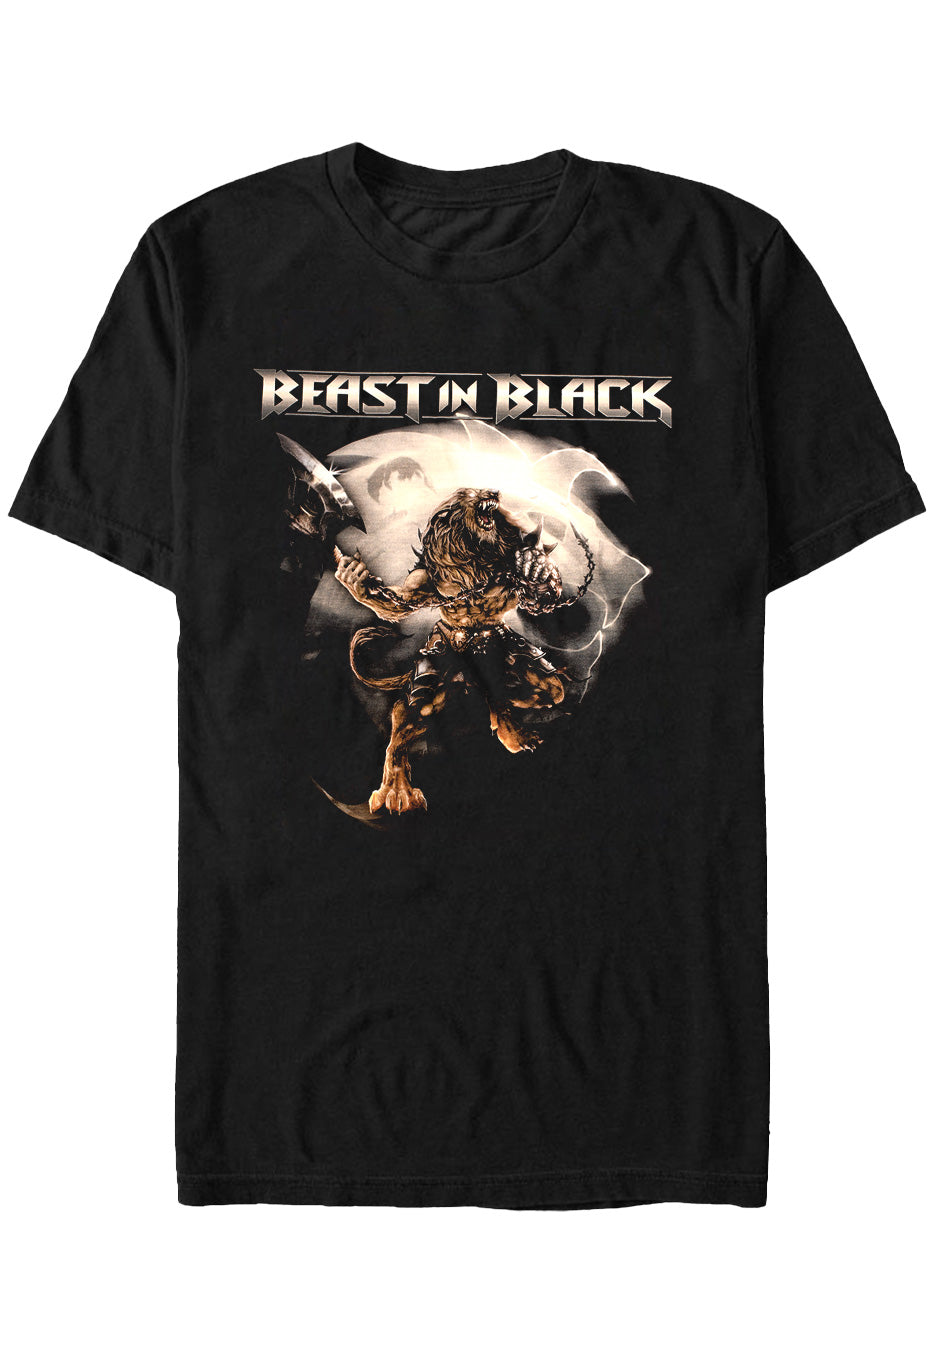 Beast In Black - Berserker - T-Shirt